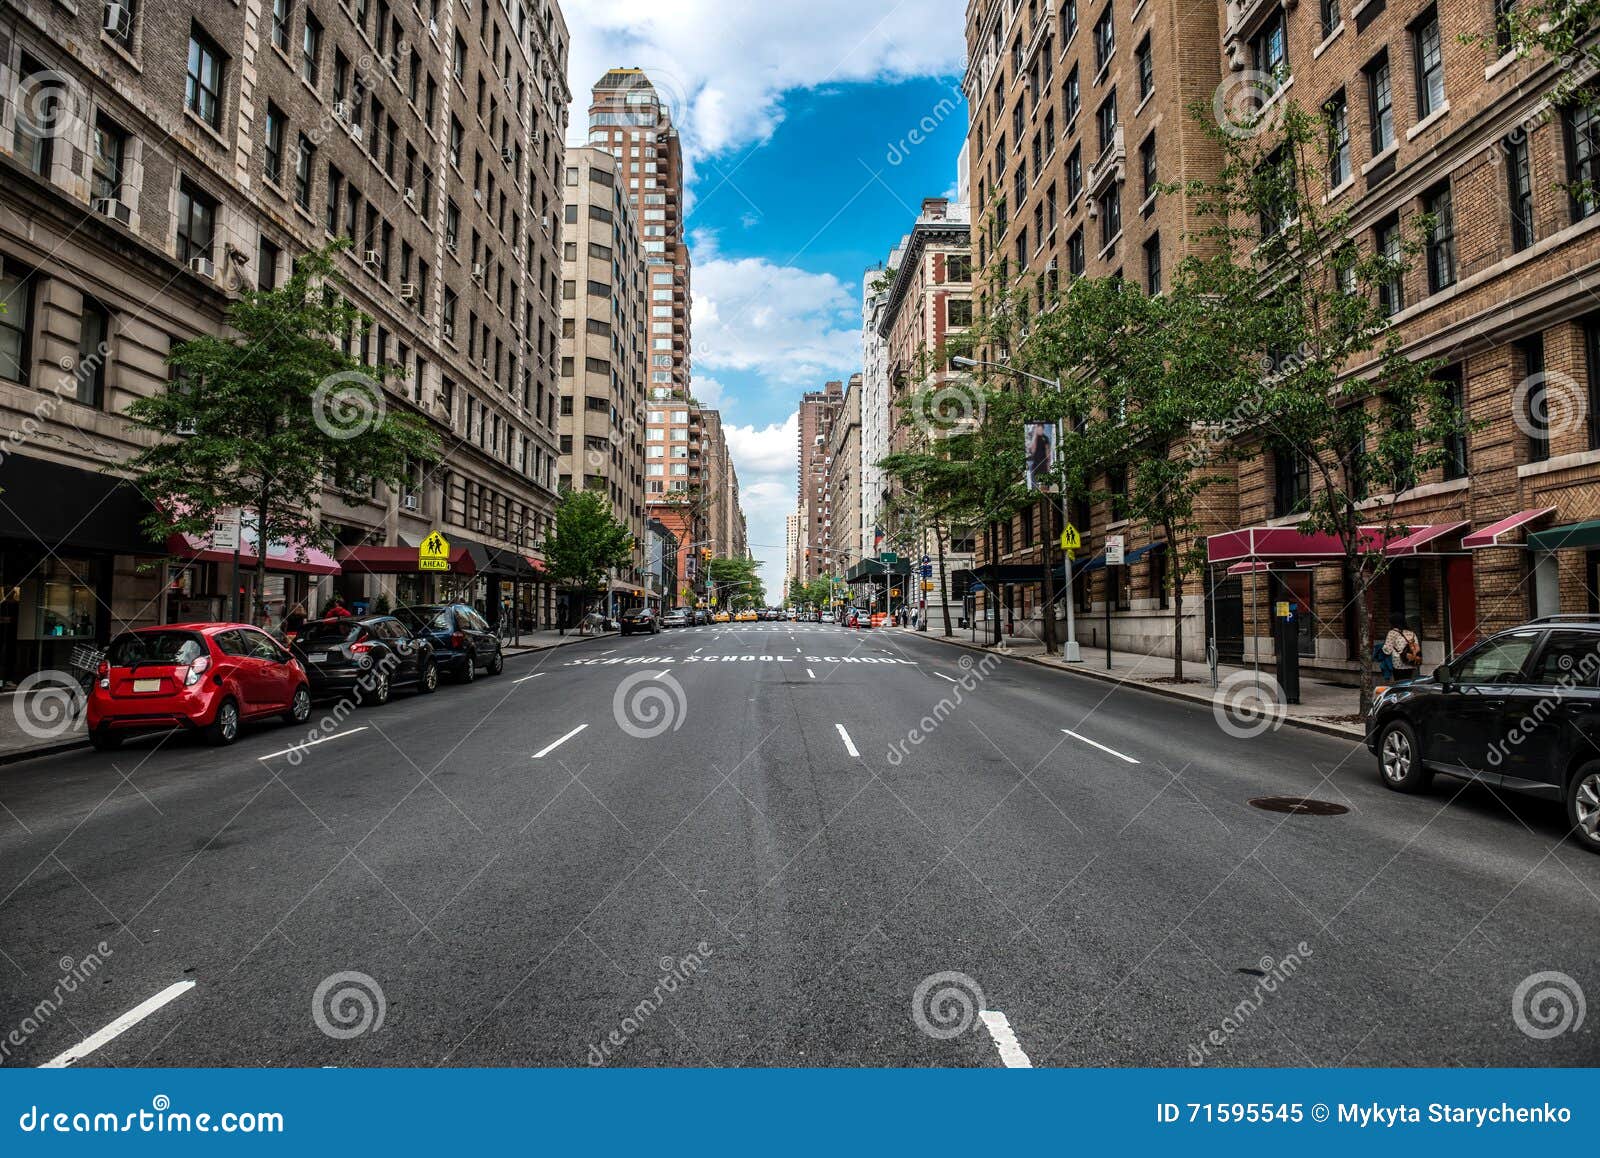 new york city manhattan empty street at midtown at sunny day